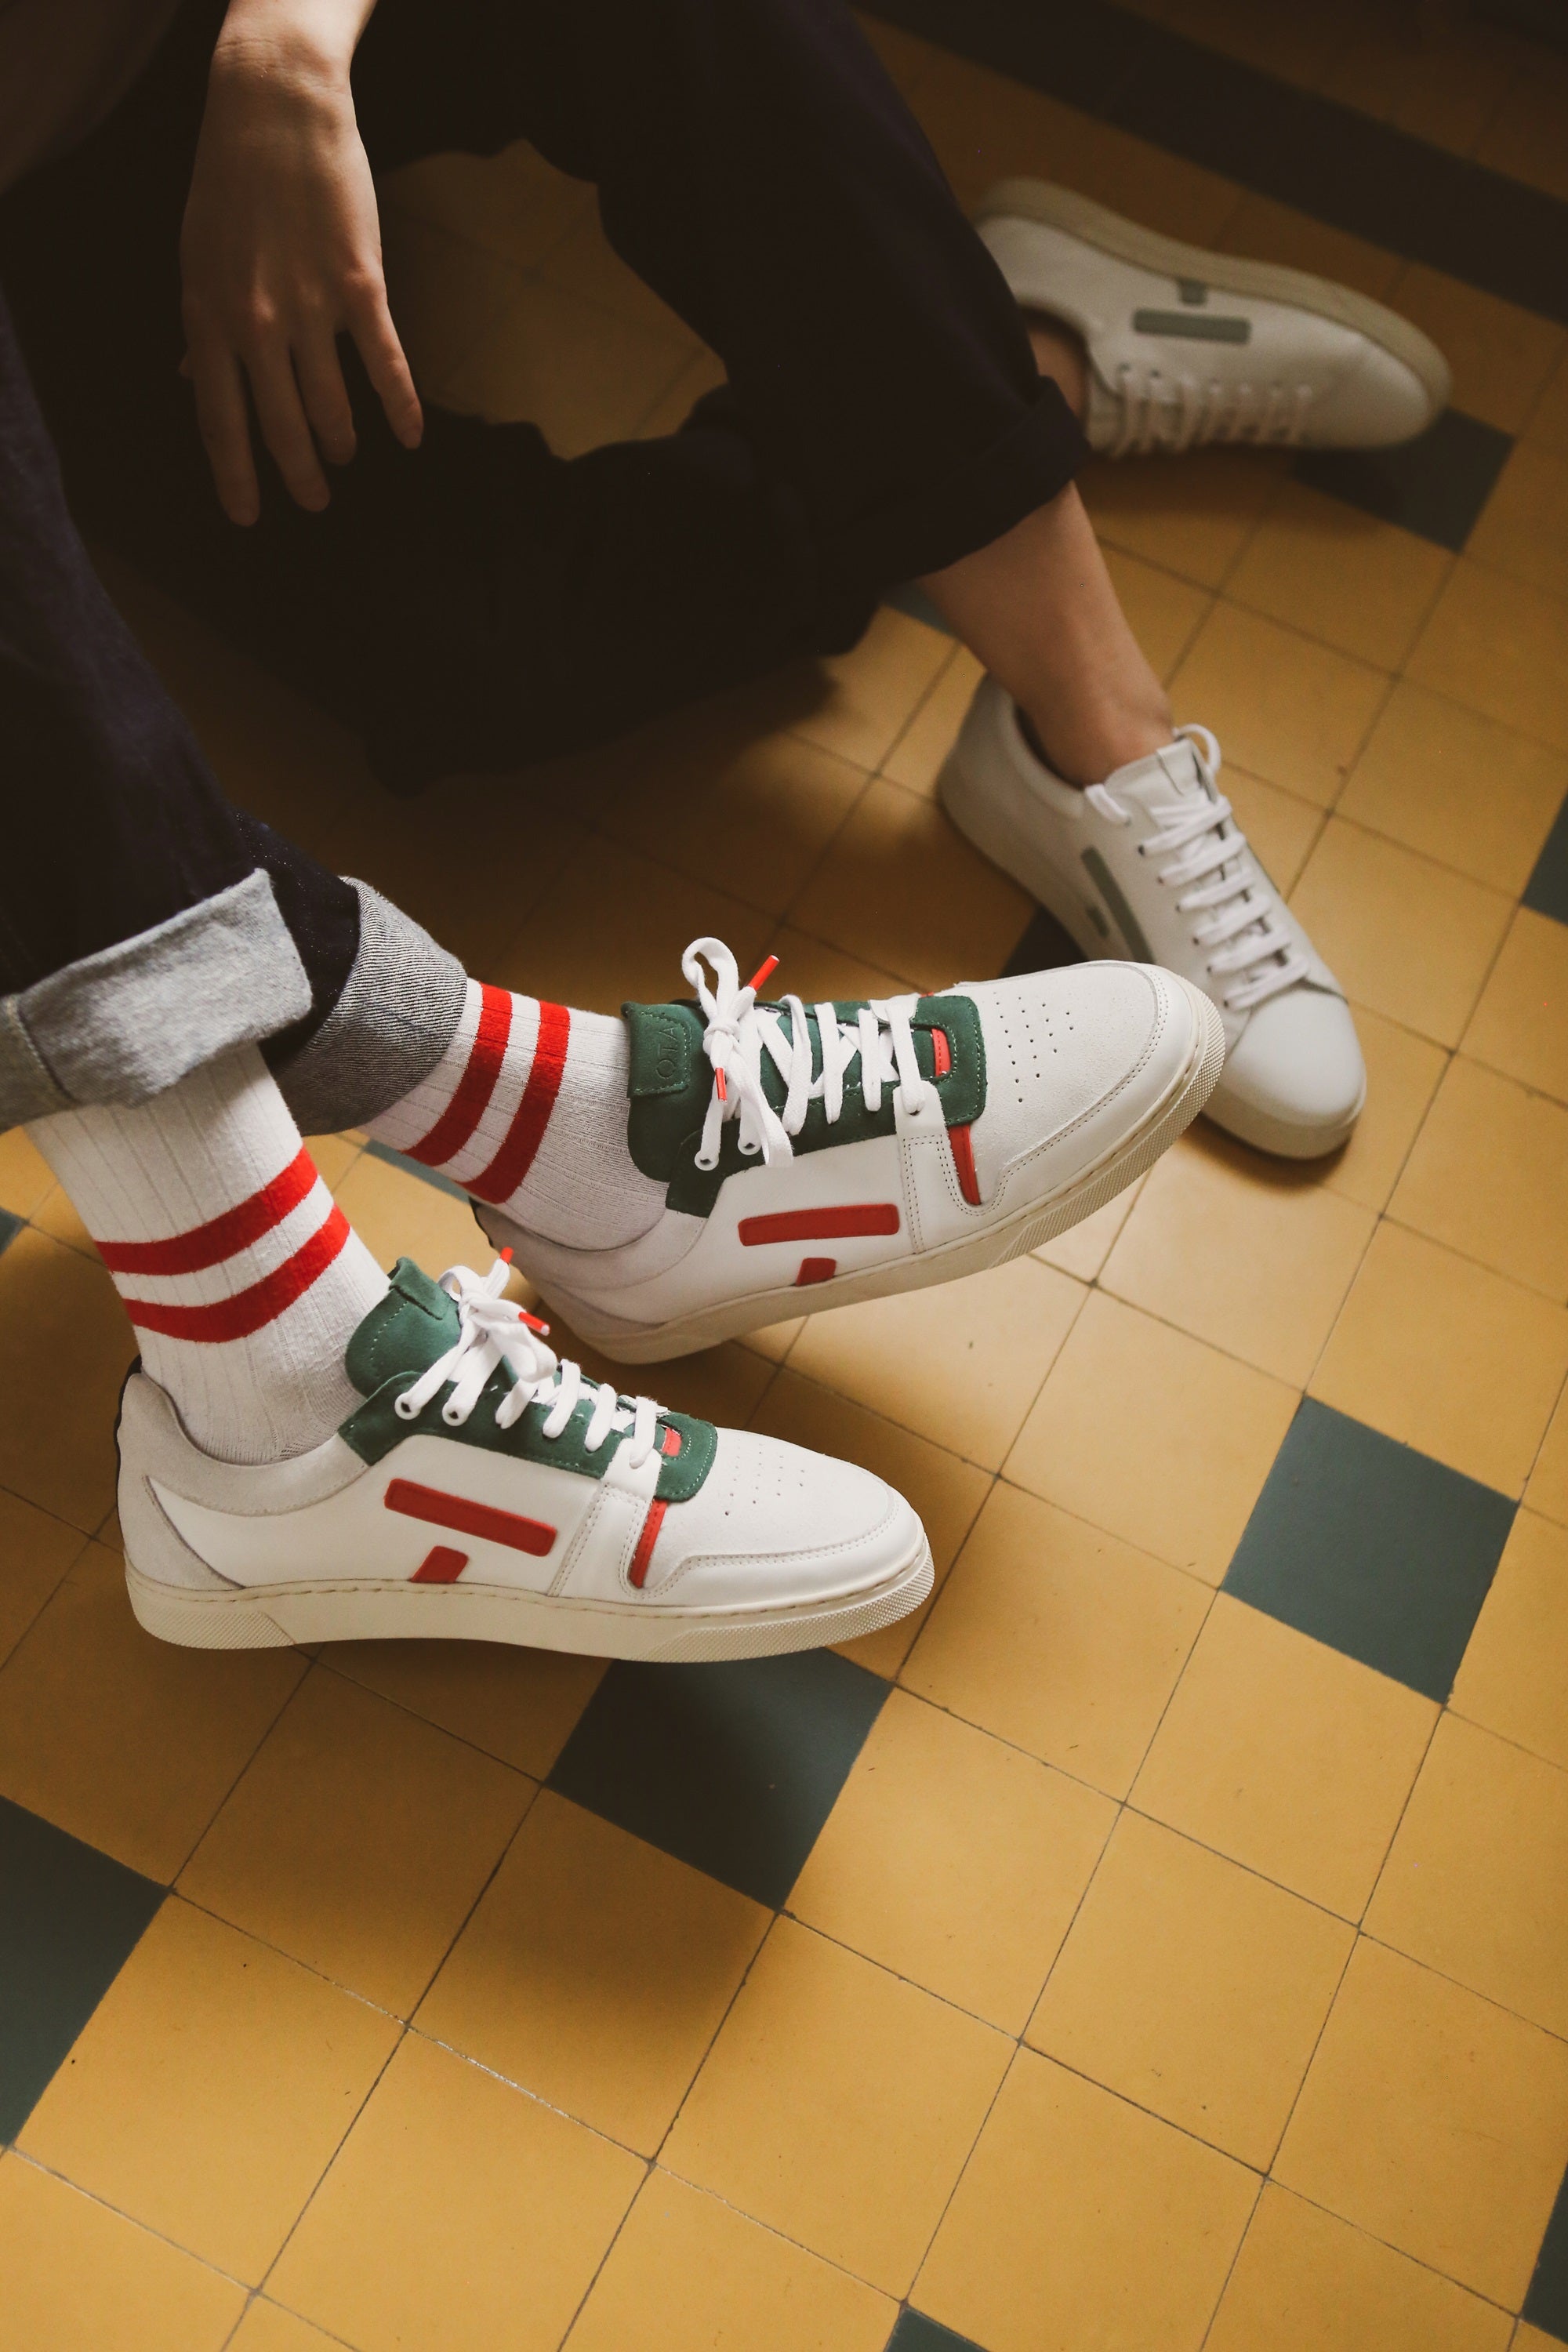 Ledersneaker Sansaho rot und grün